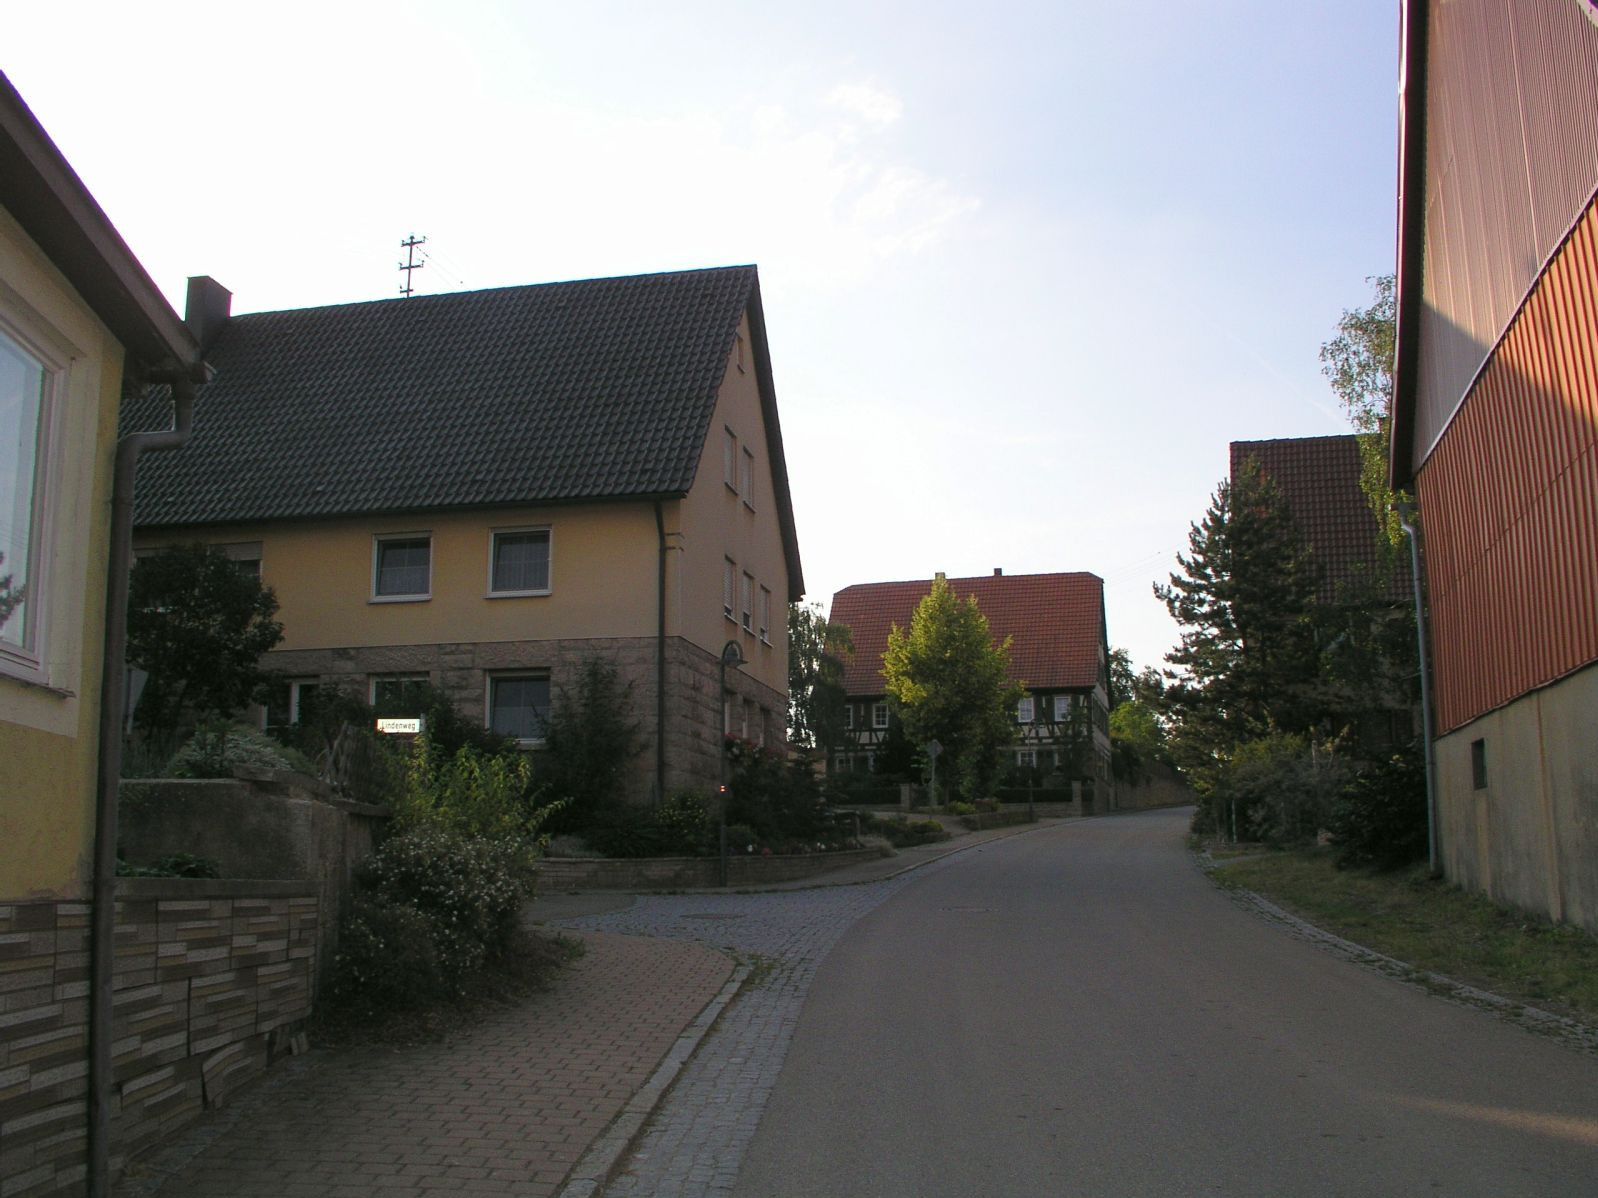 In Hohenberg